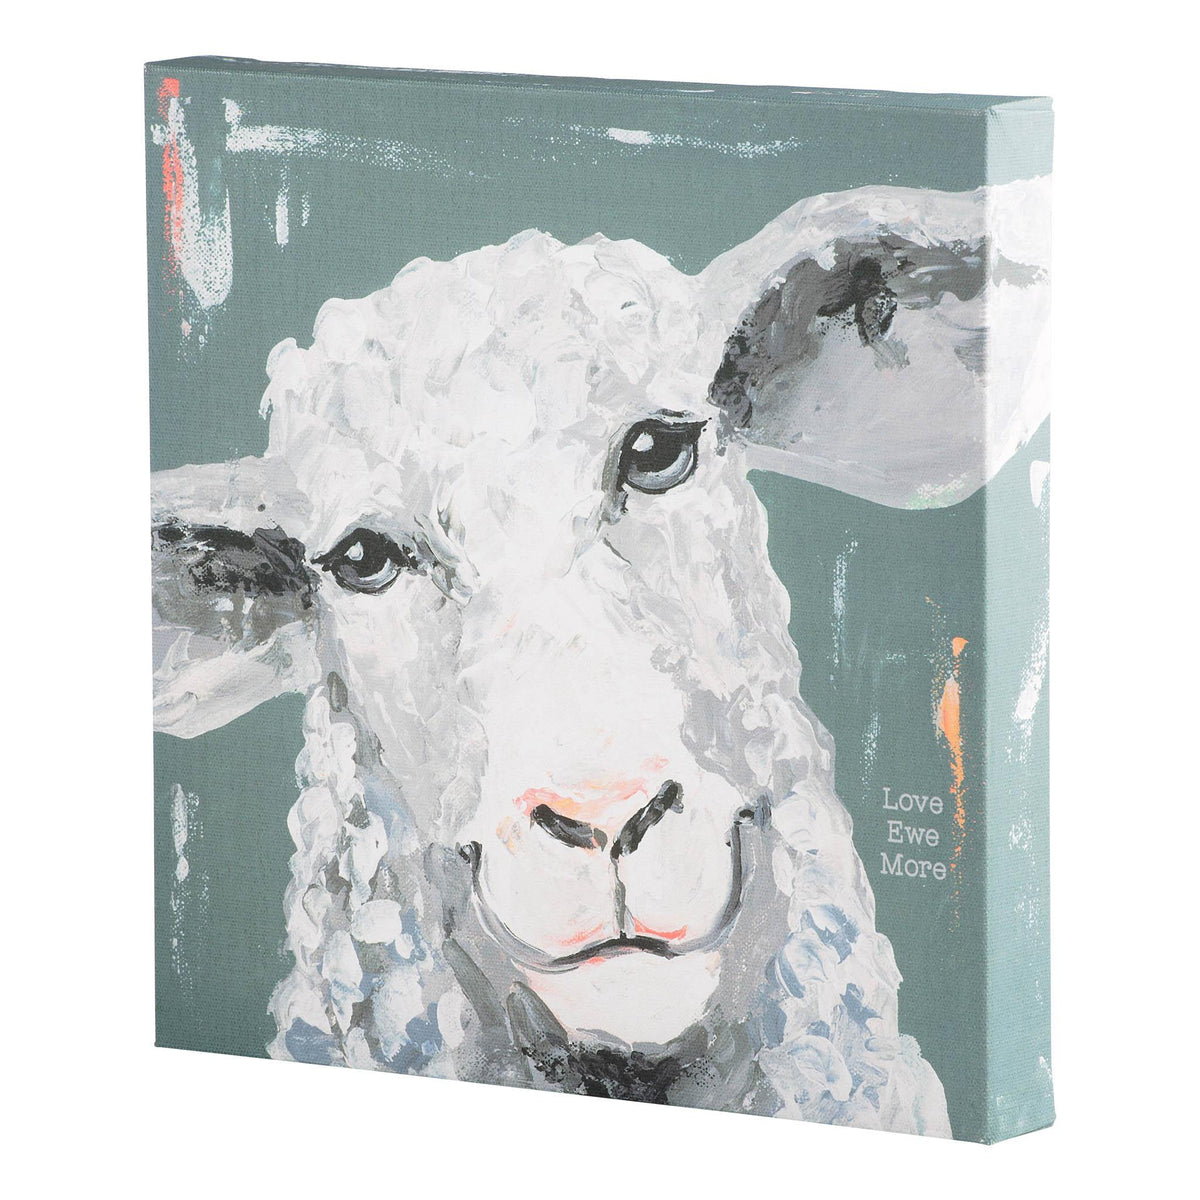 Love Ewe More Sheep Canvas - GLORY HAUS 